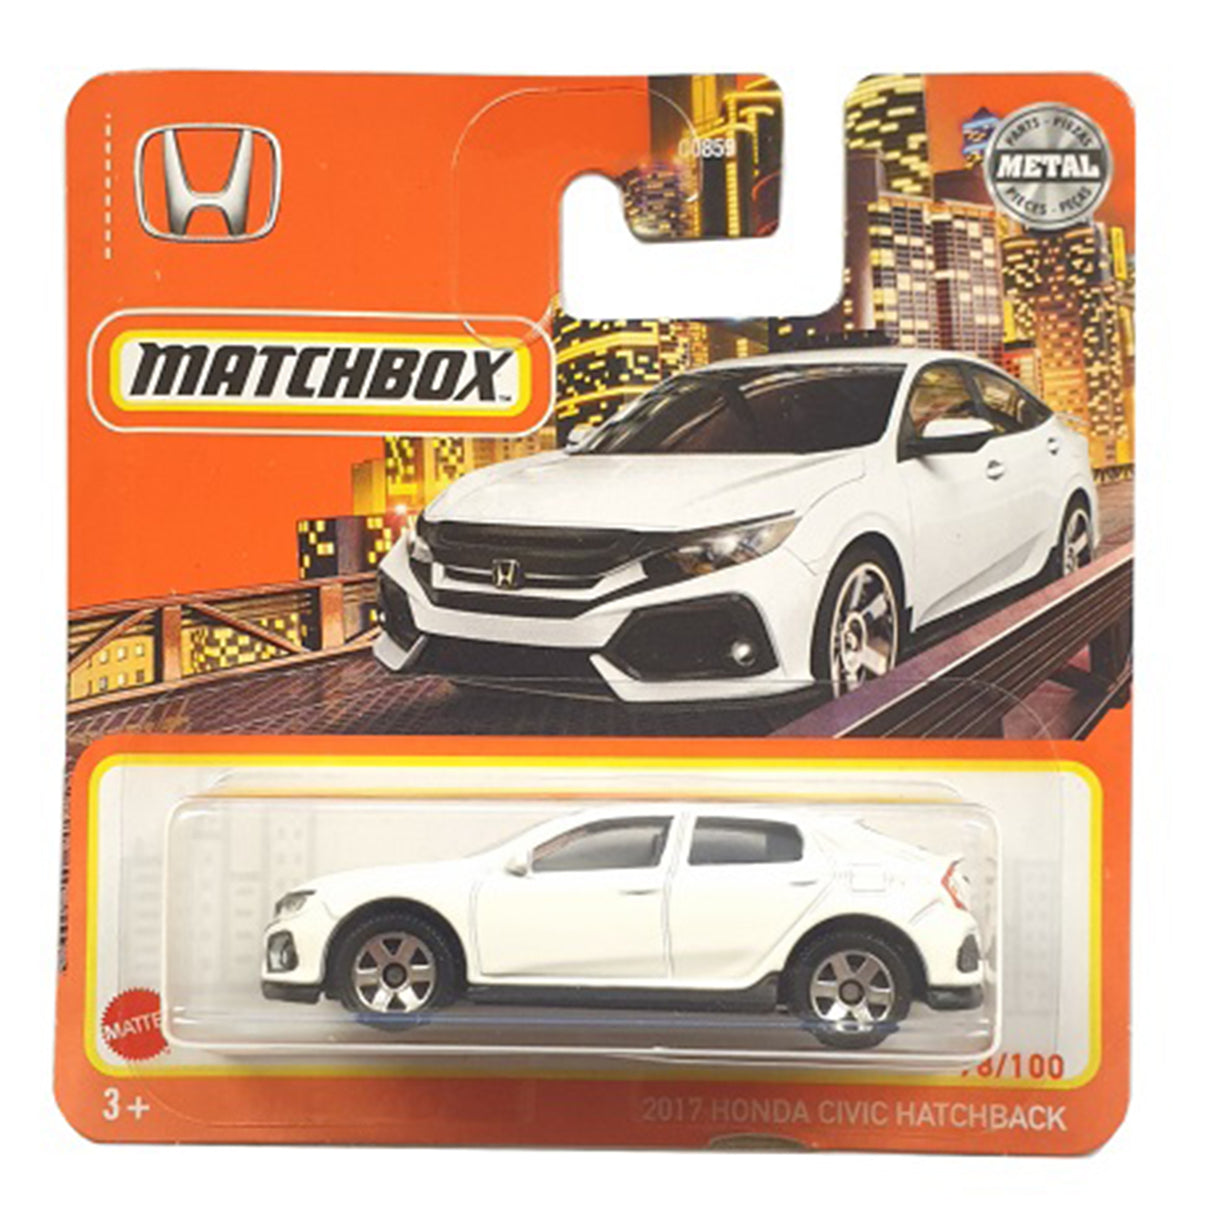 Matchbox 2017 Honda Civic Hatchback Die-cast Model GXN16